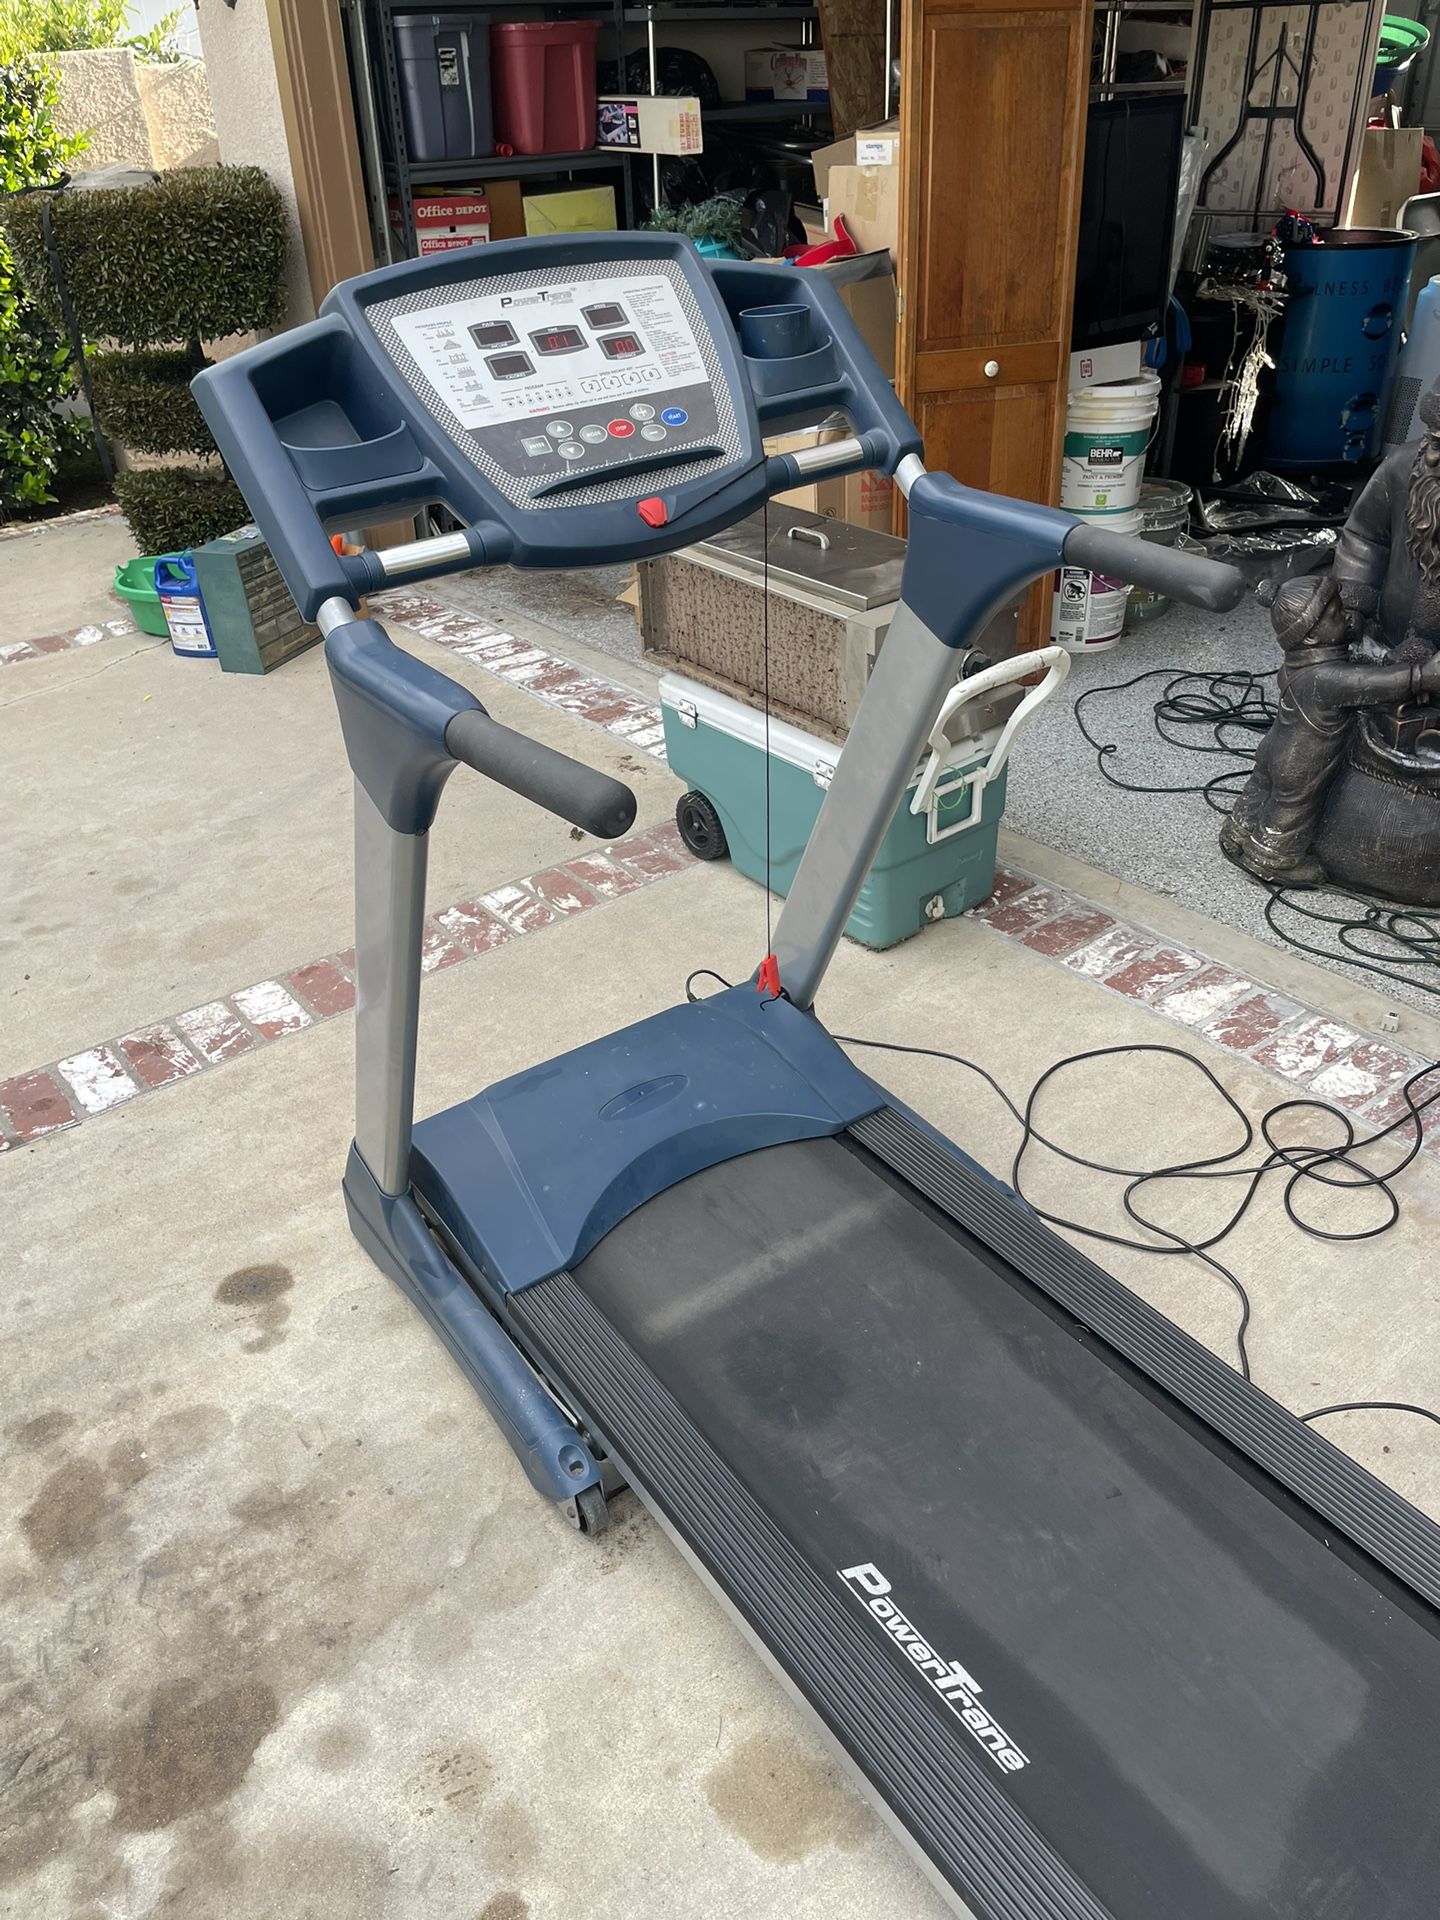 PowerTrane PT-422 Treadmill 